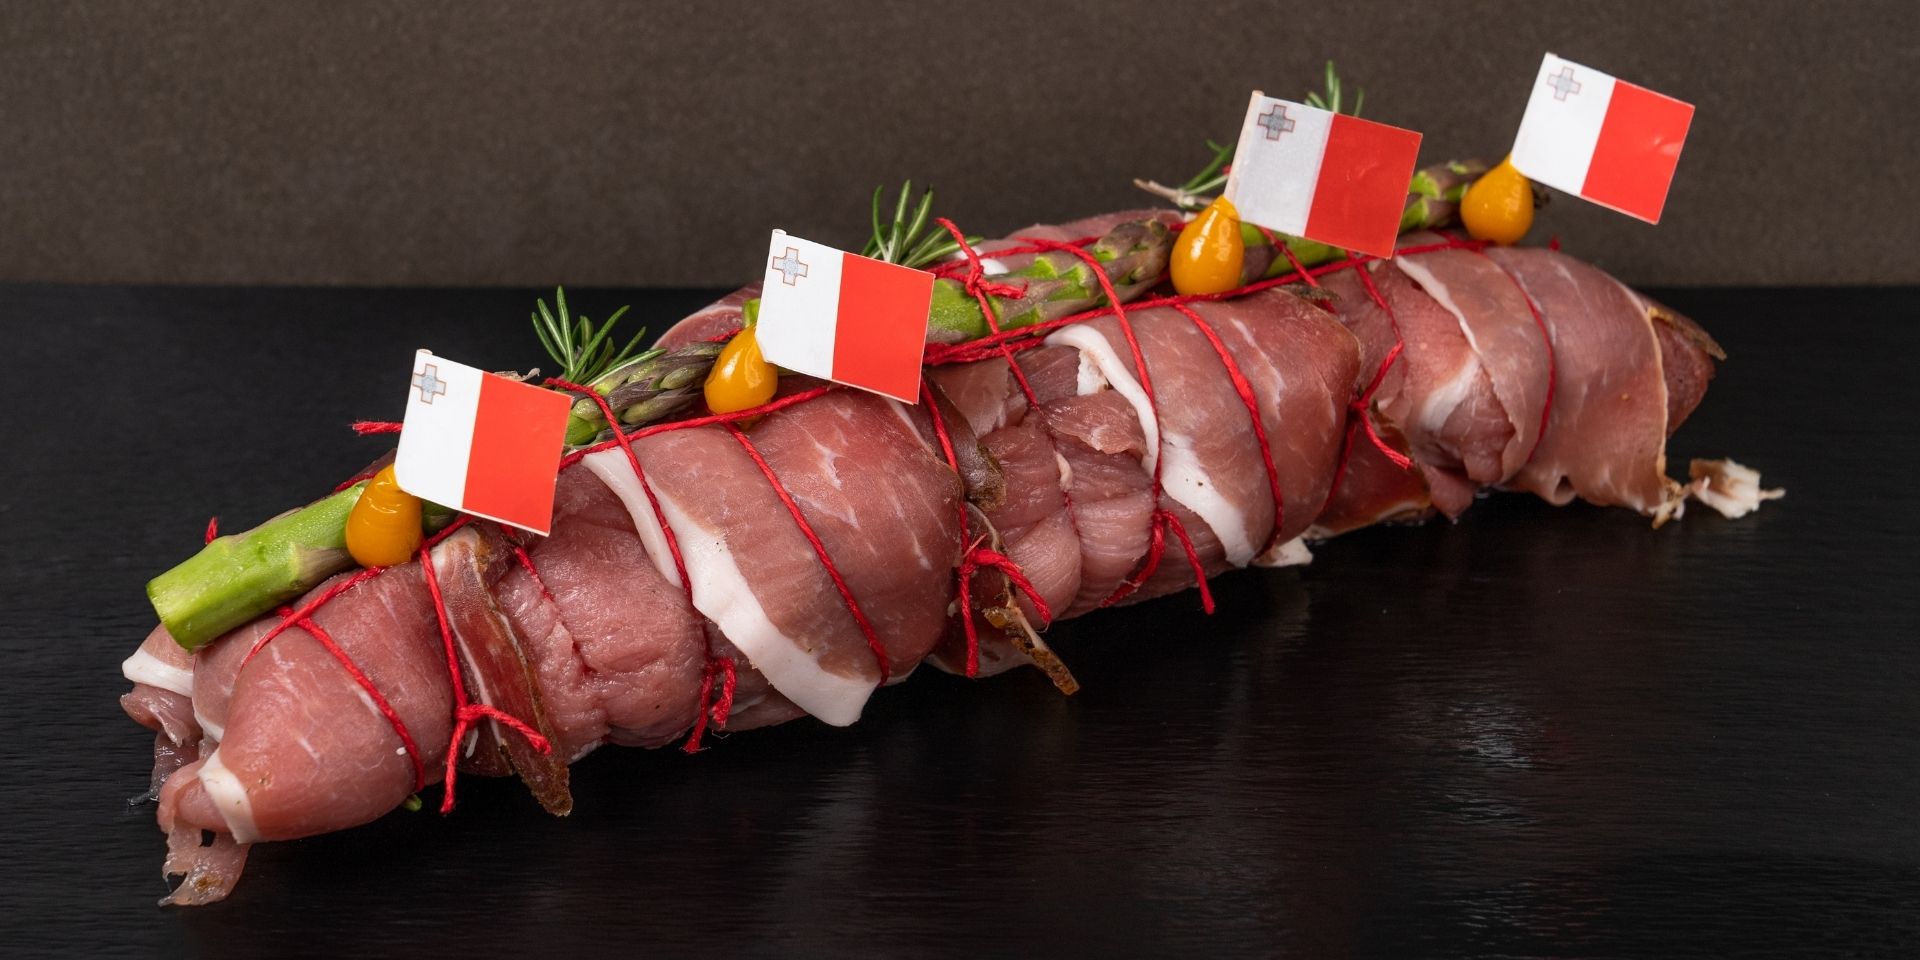 Stuffed Pork FIllet prepared for Christmas Dinners by J&M butcher Malta